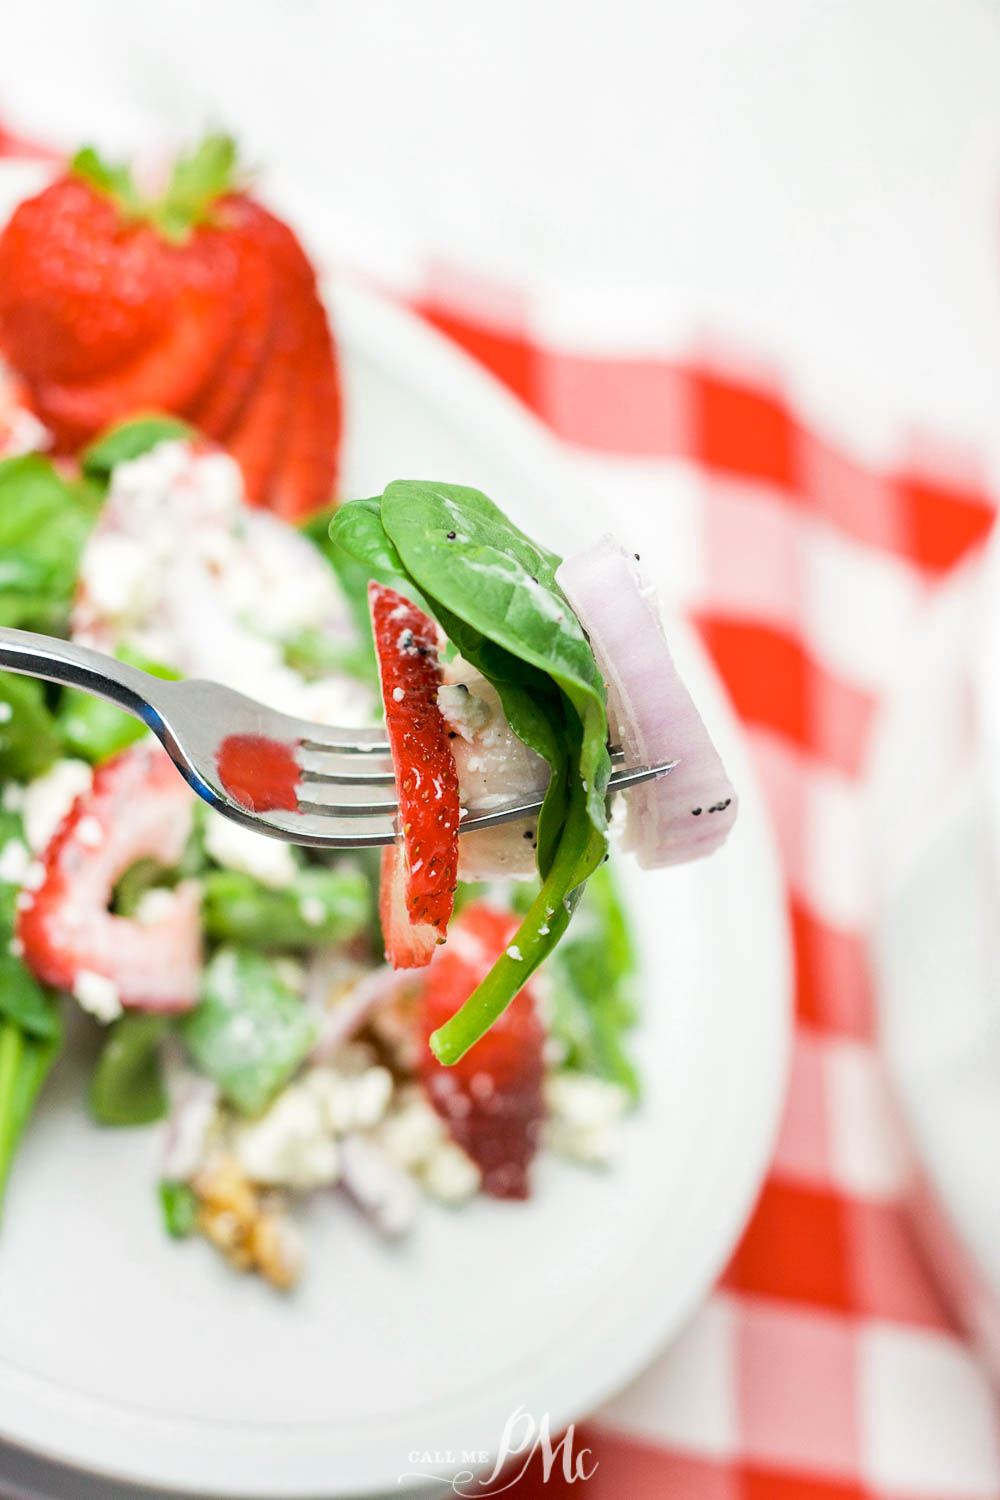 Strawberry Feta Salad